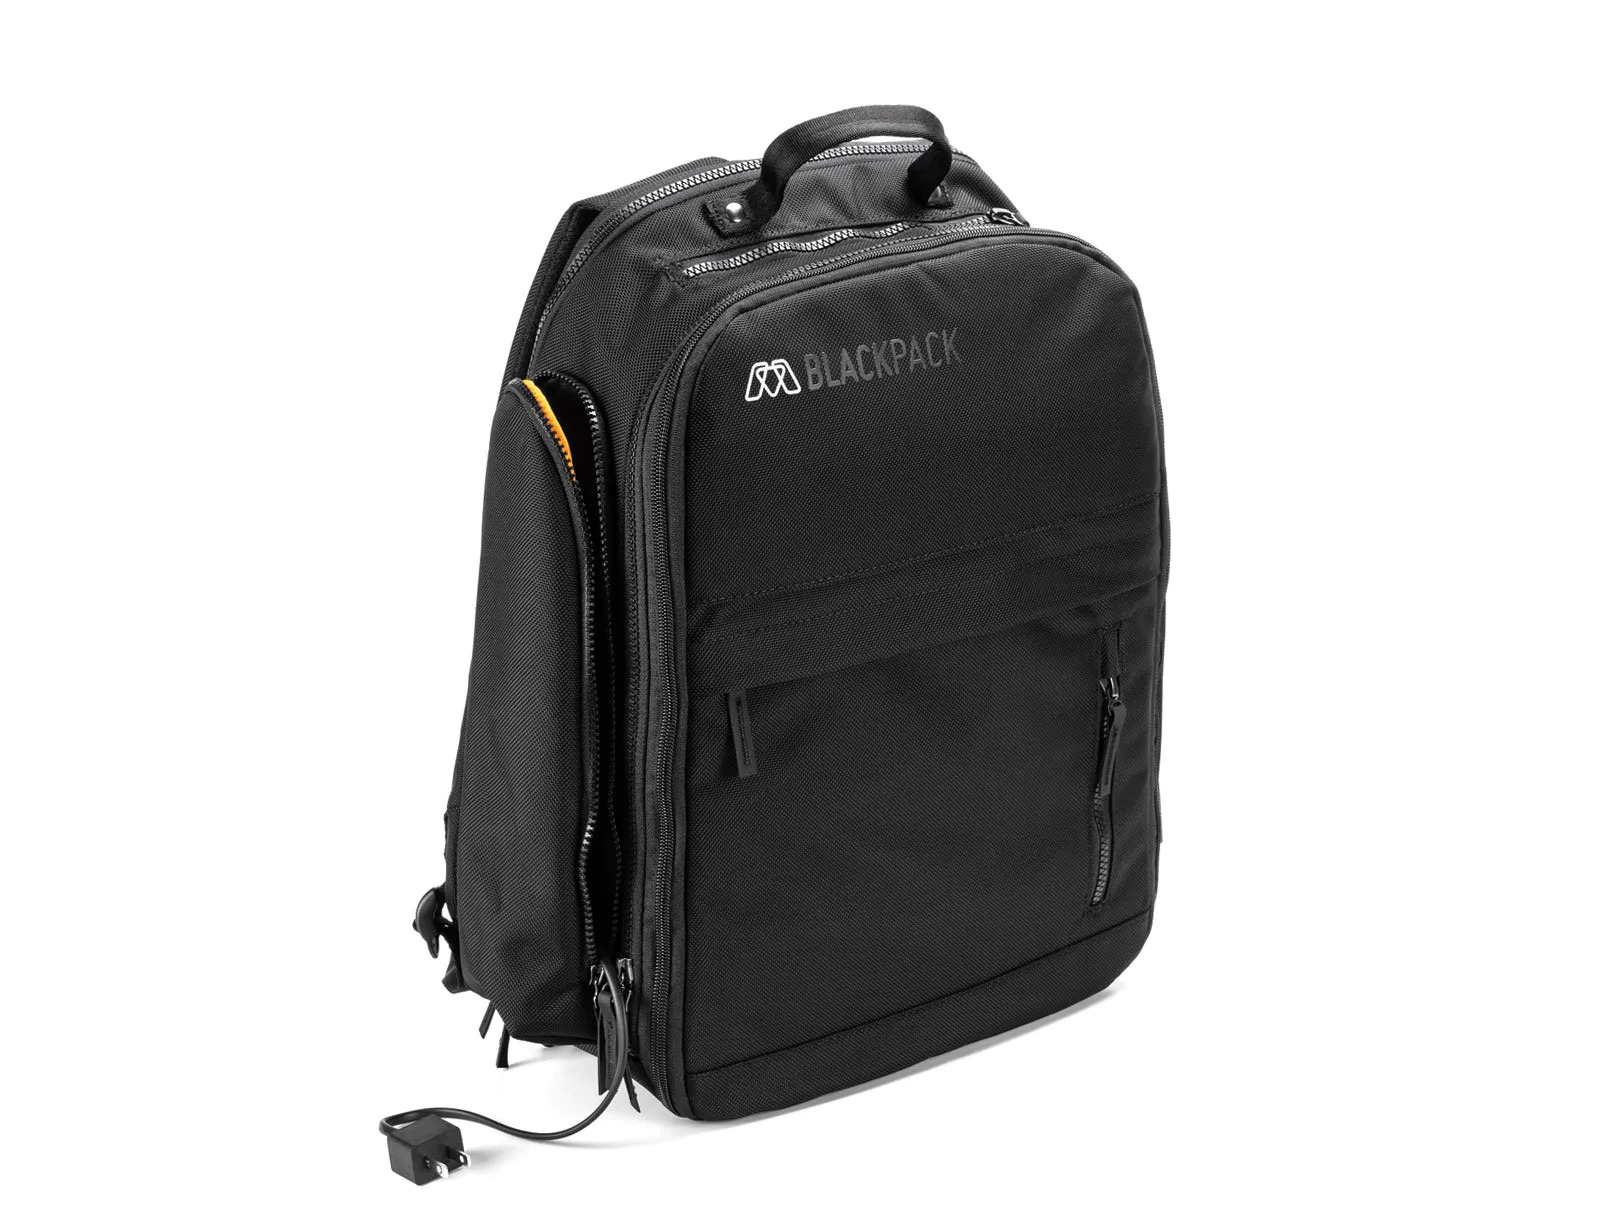 MOS Blackpack, 27L Premium Tech Backpack